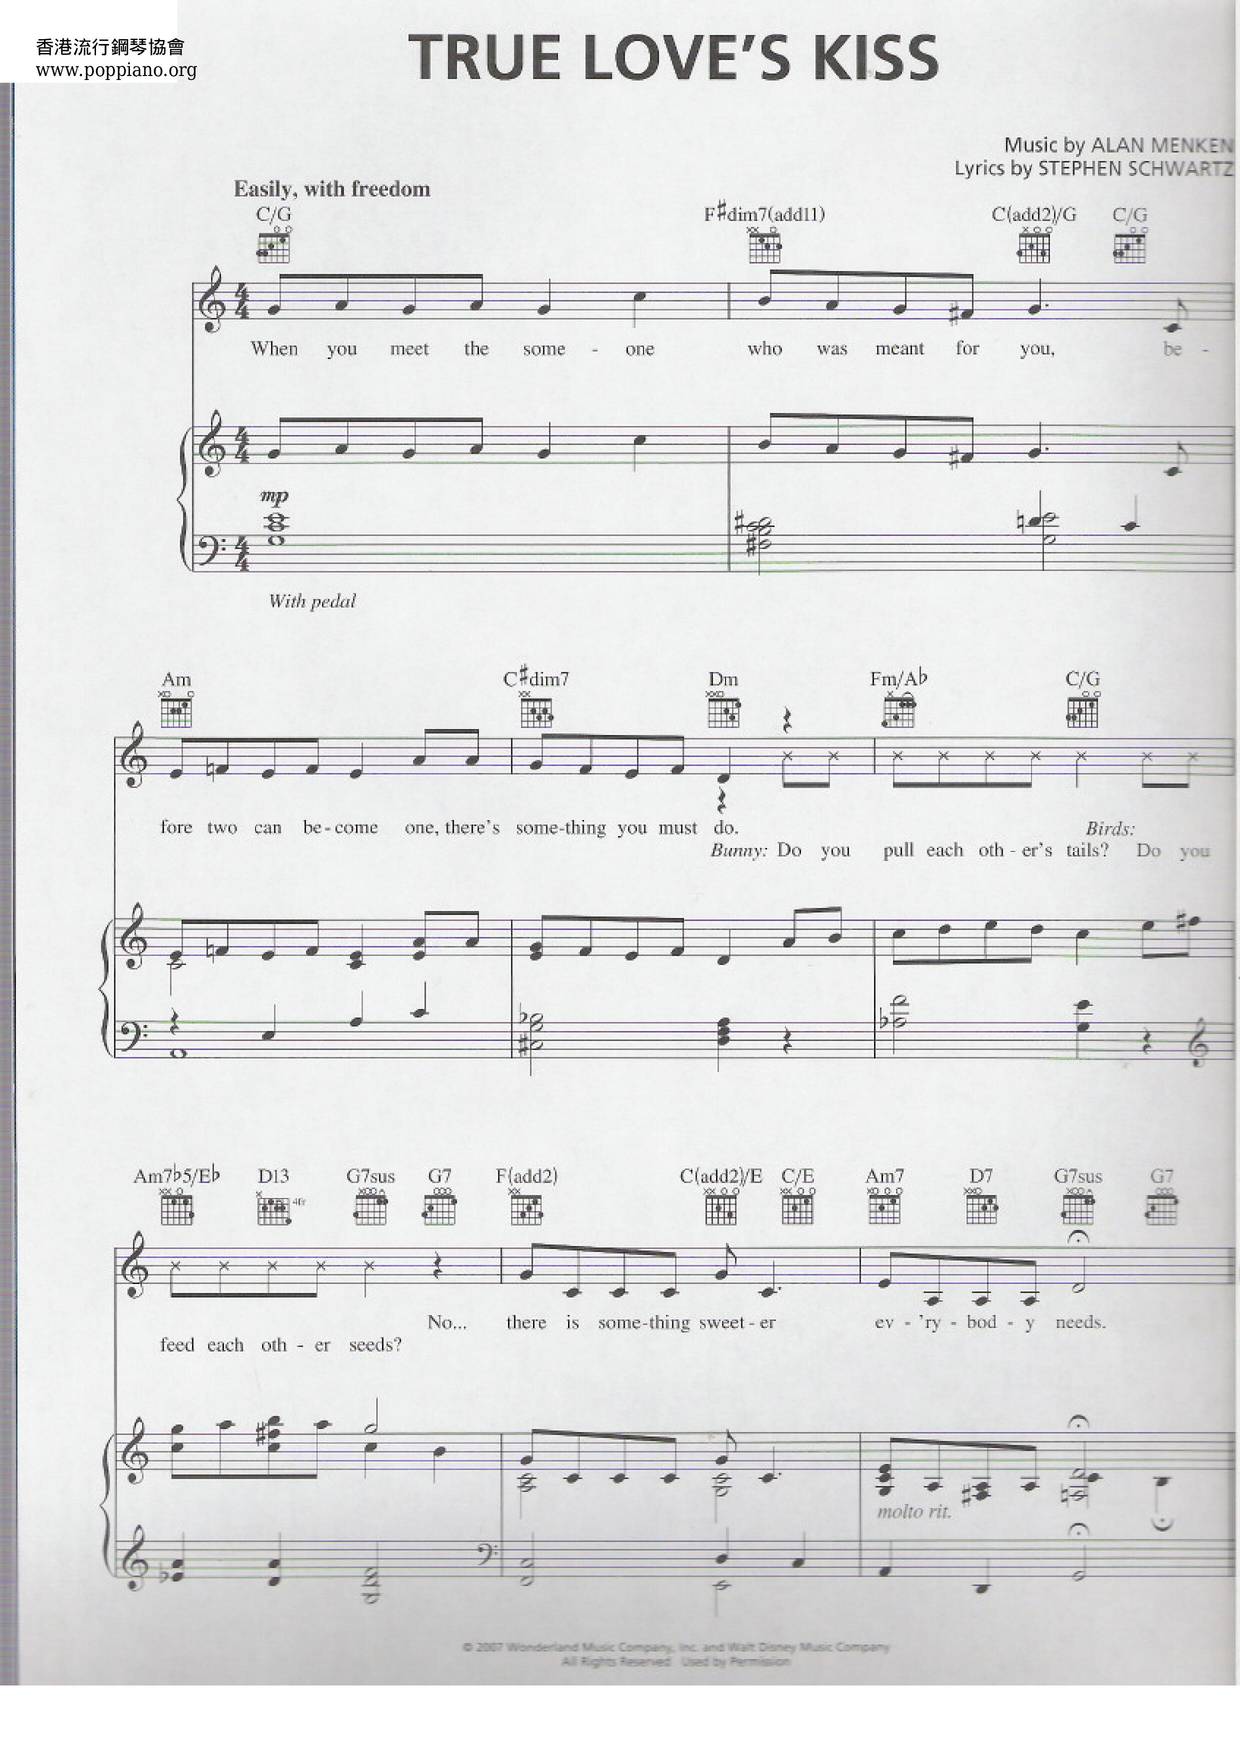 Enchanted - Ture Love's Kiss Score